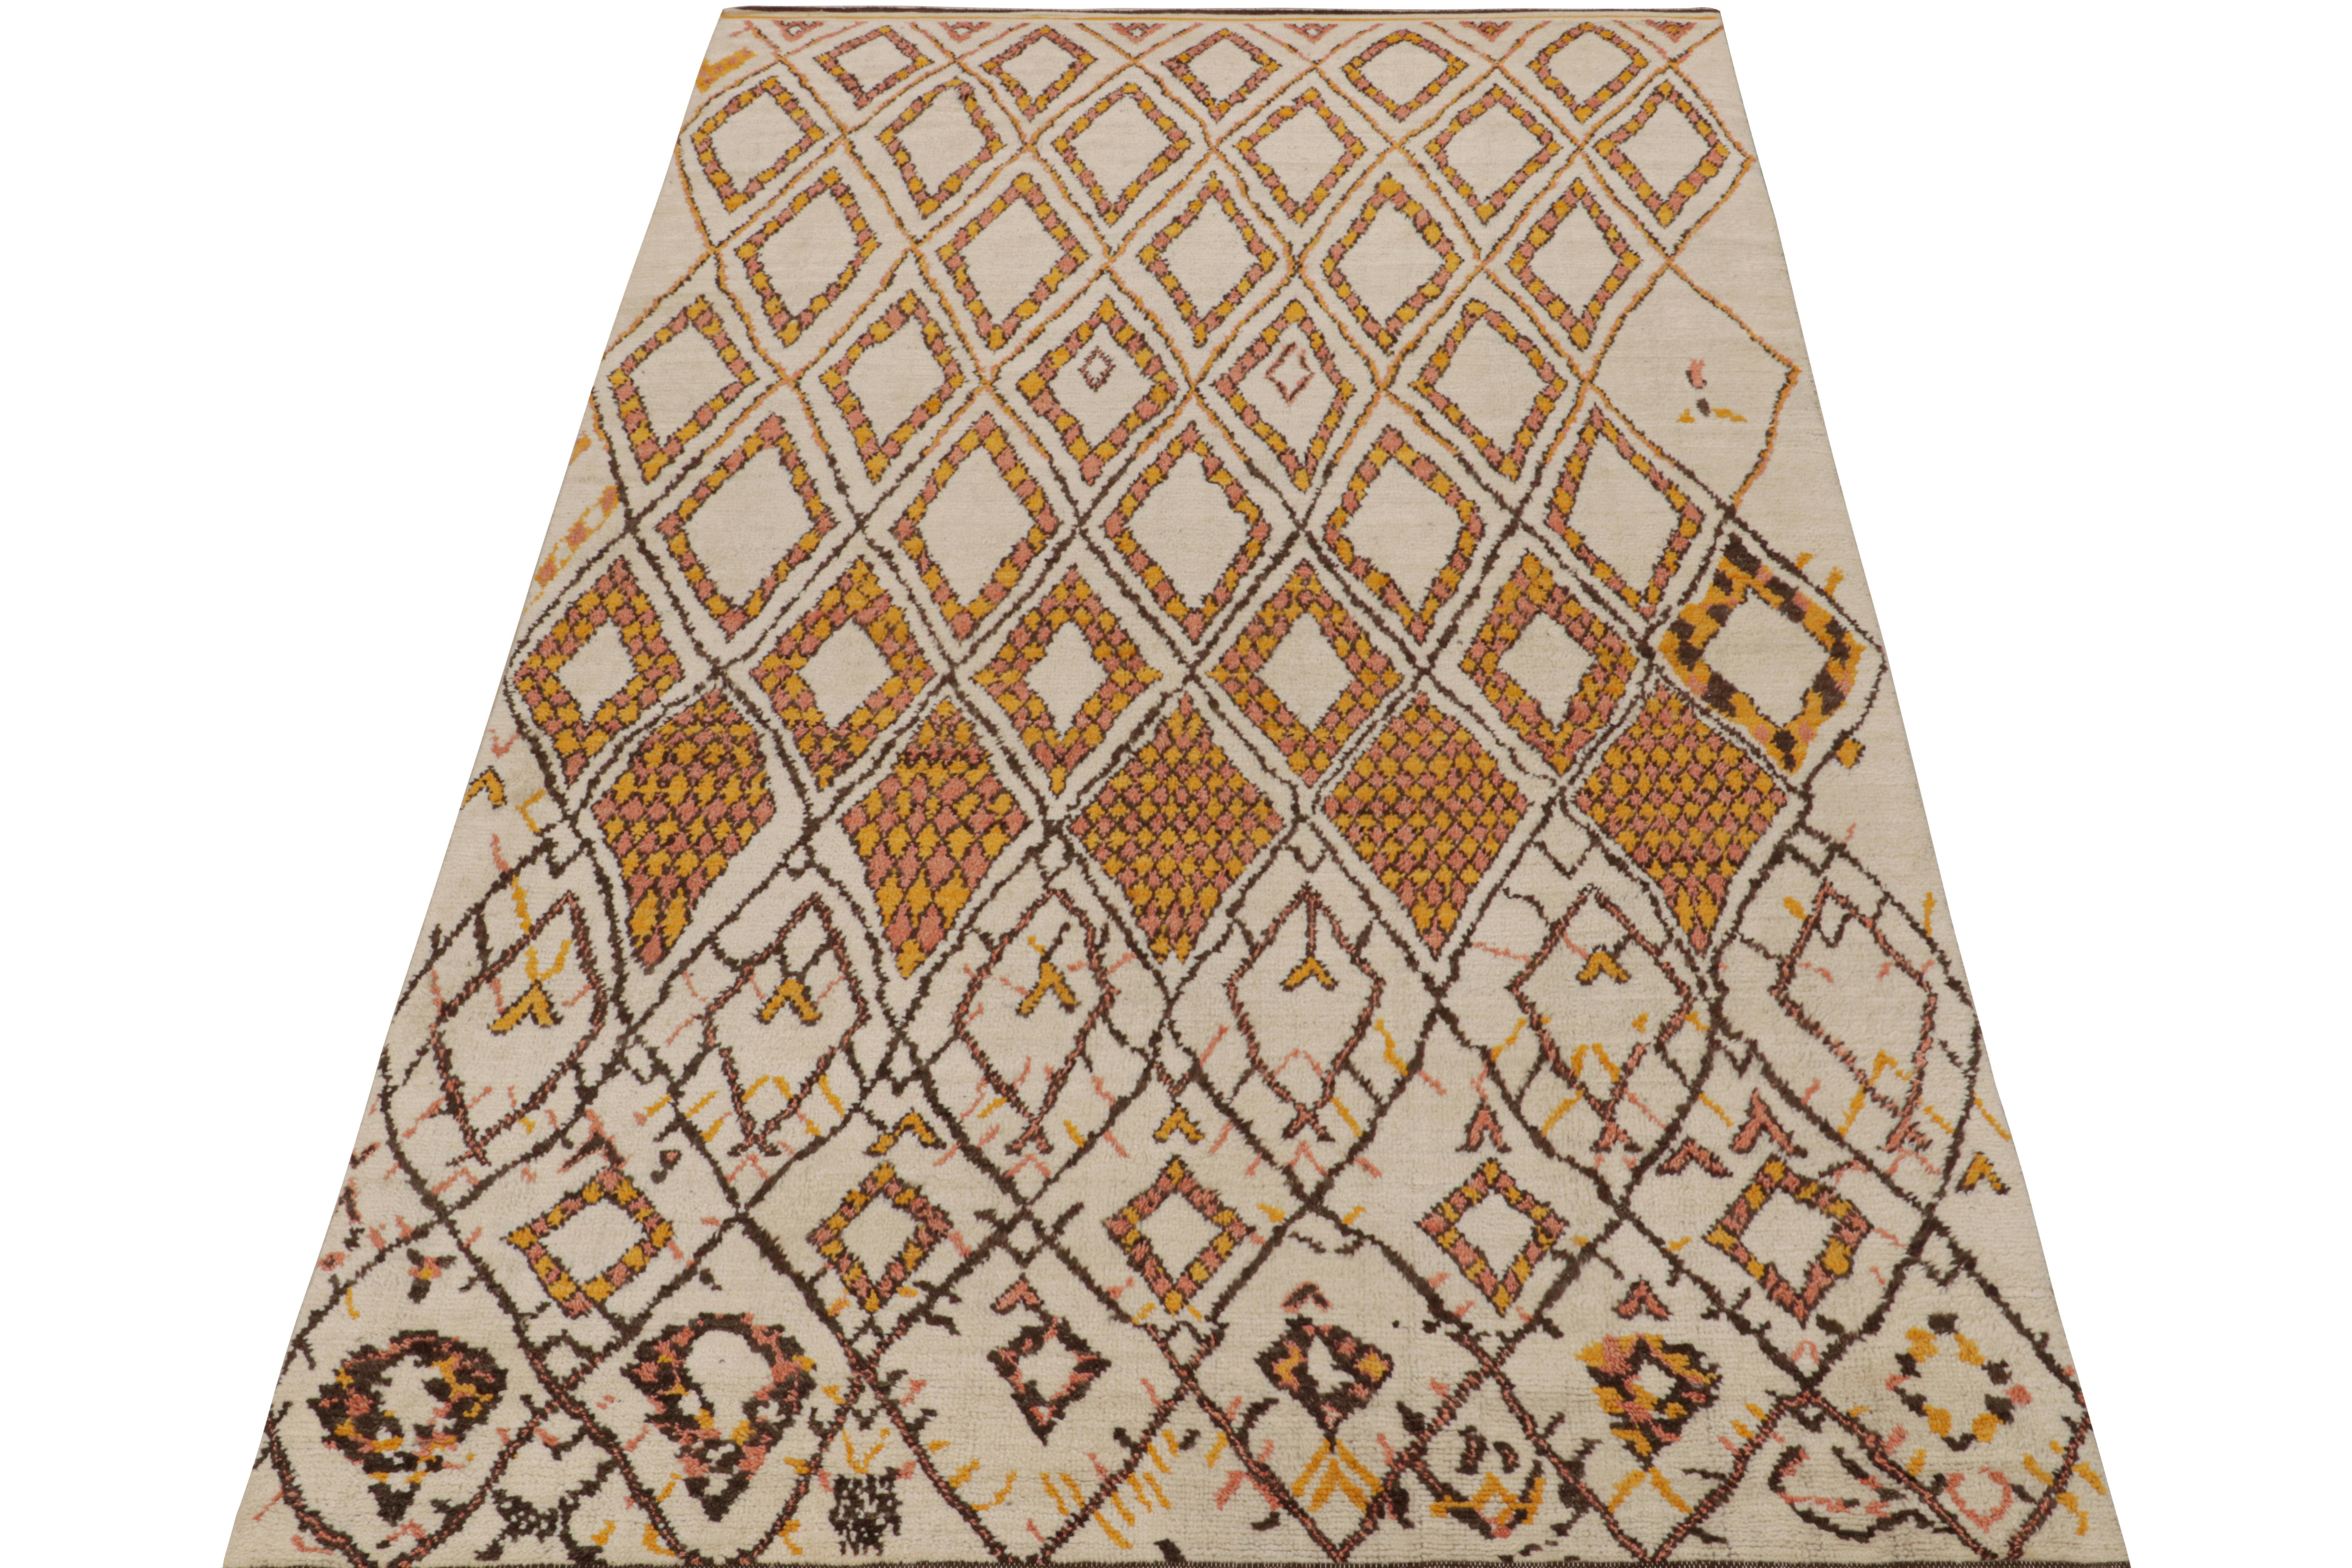 Tribal Rug & Kilim’s Moroccan Style Rug in Beige-Brown & Orange Geometric Patterns For Sale